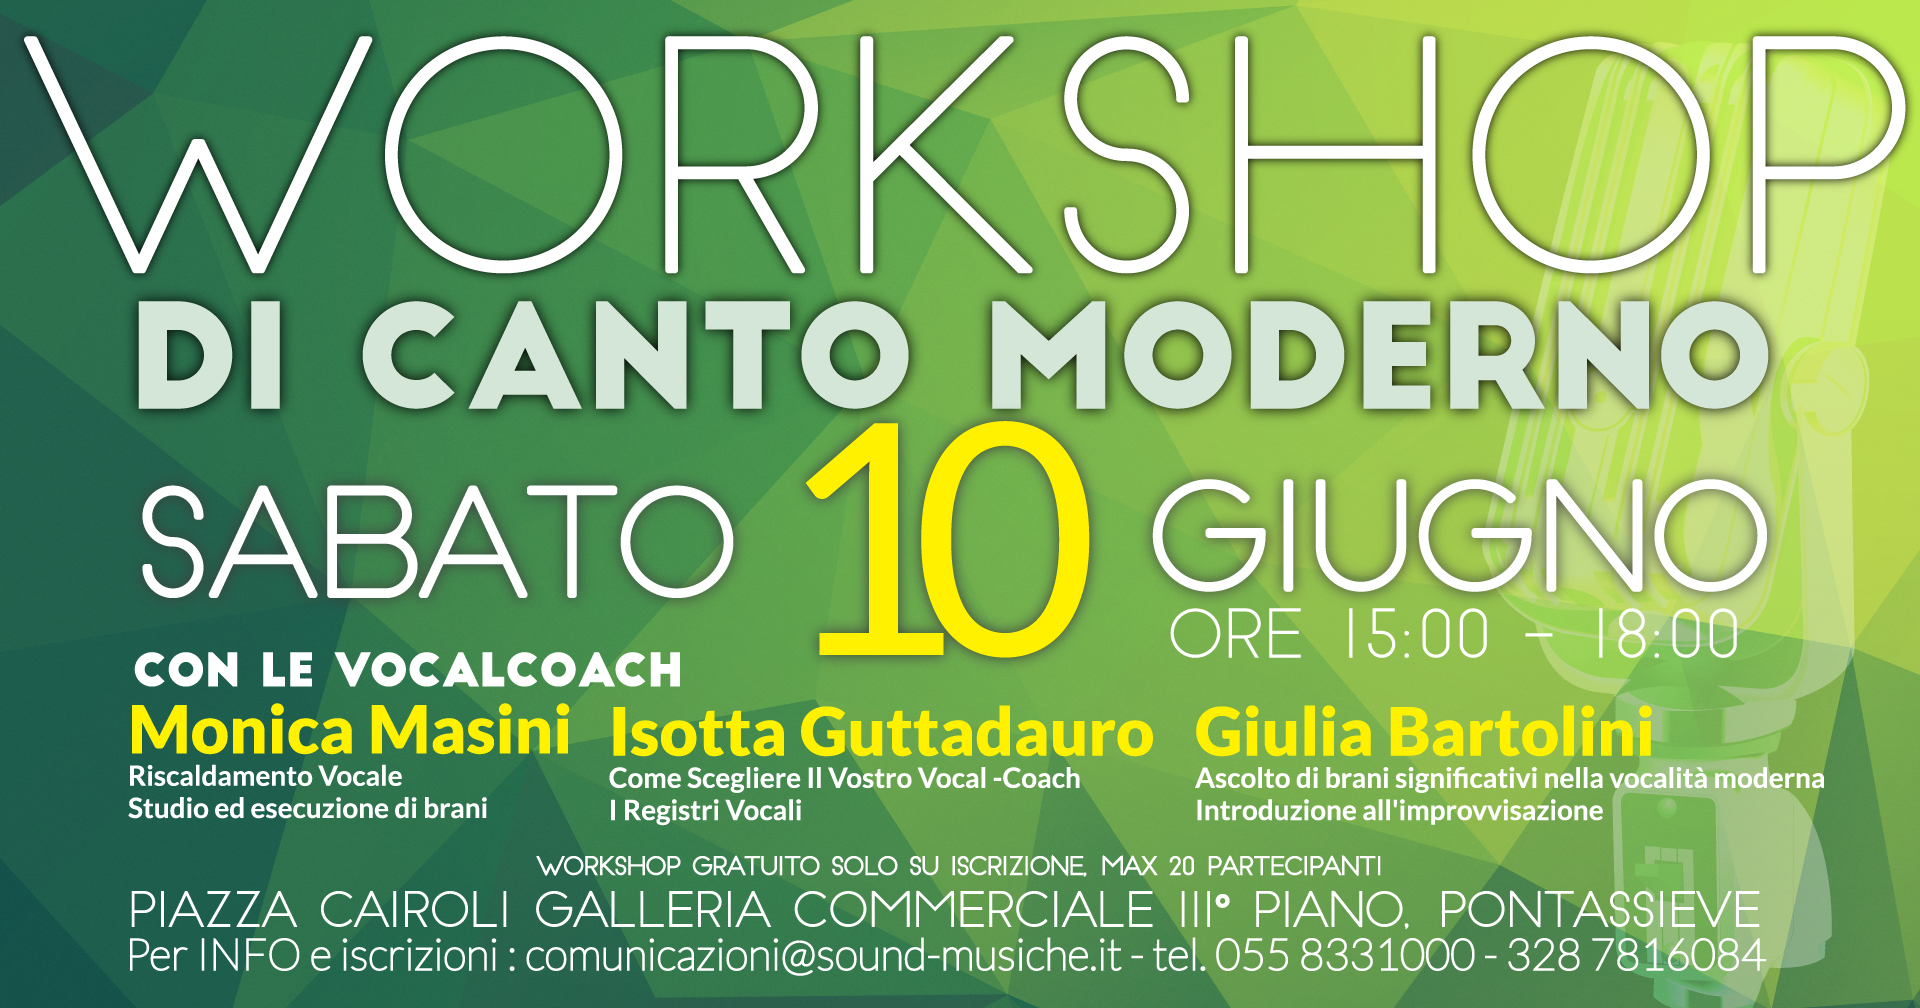 Workshop di Canto Moderno Sabato 10 Giugno 2017 ore 15 Pontassieve